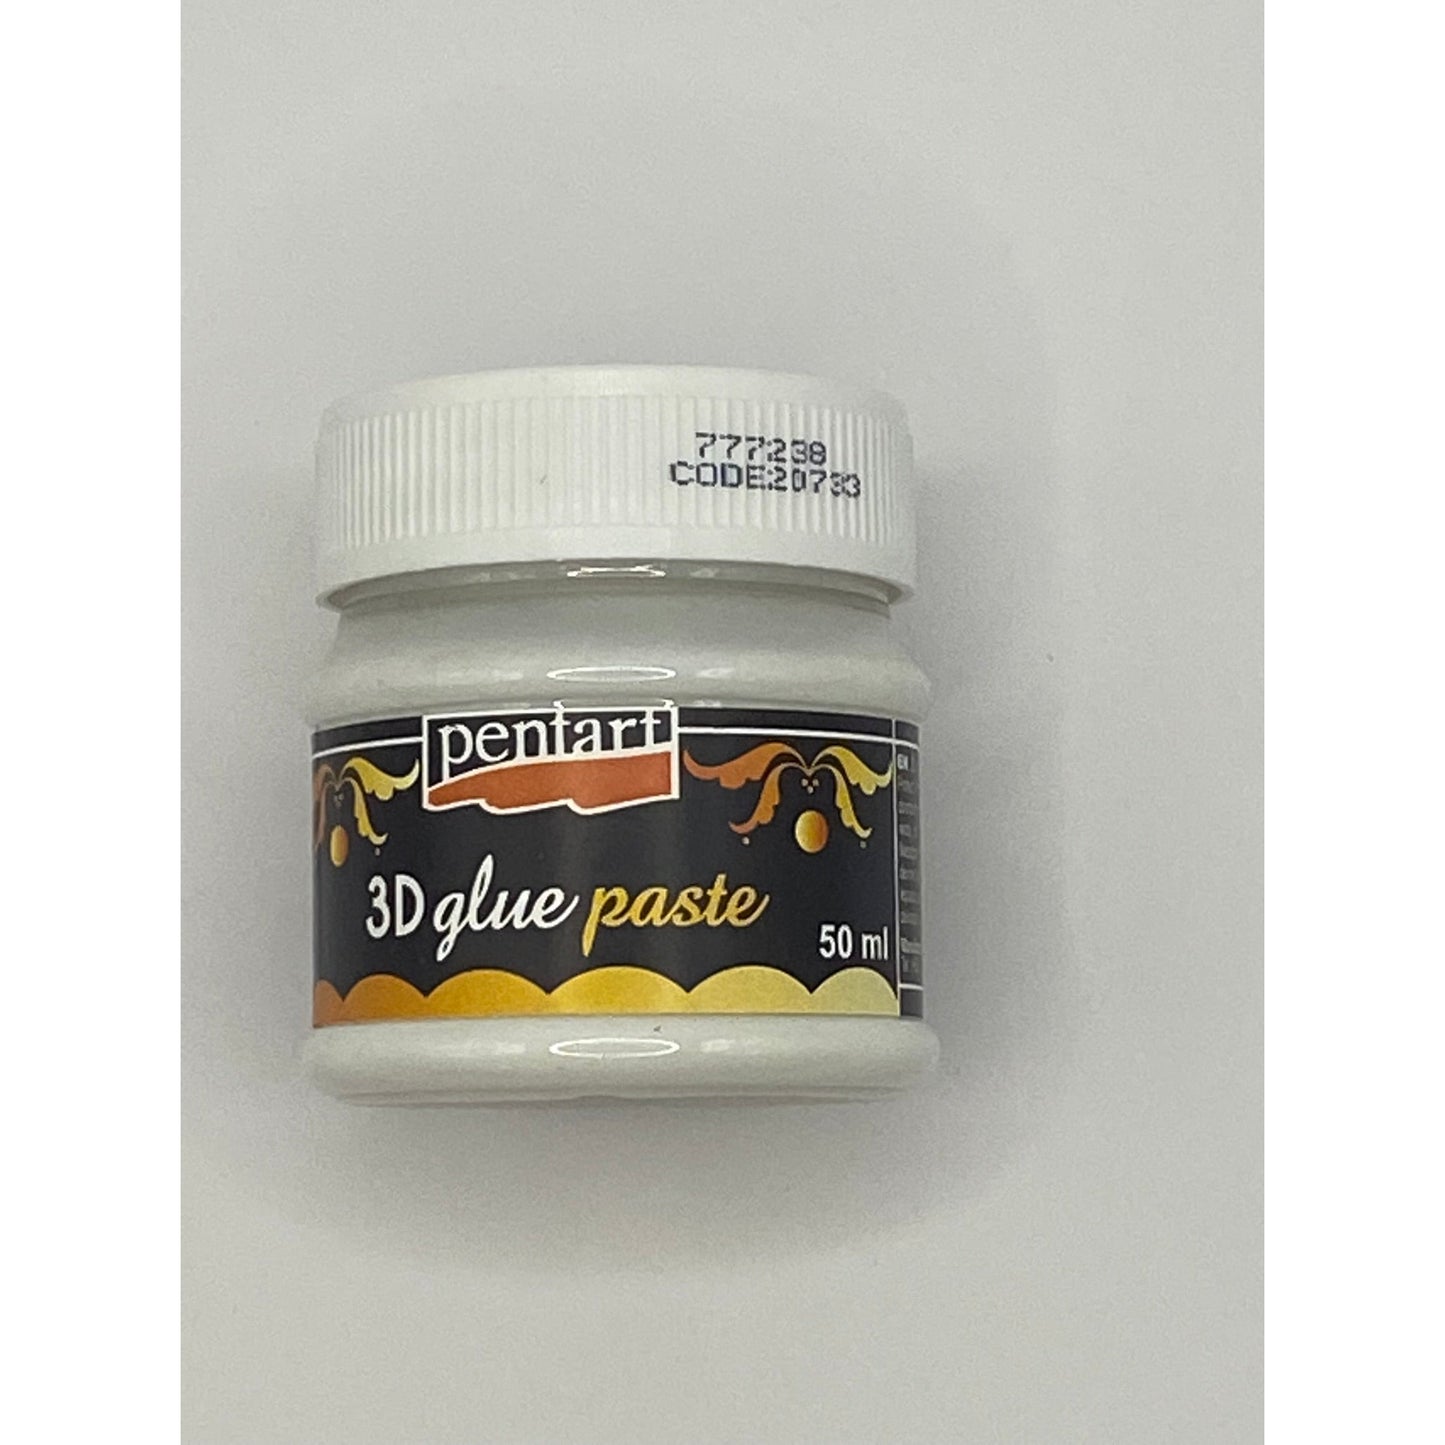 Pentart - 3D Glue Paste - 50 ml / 1.69 ounces